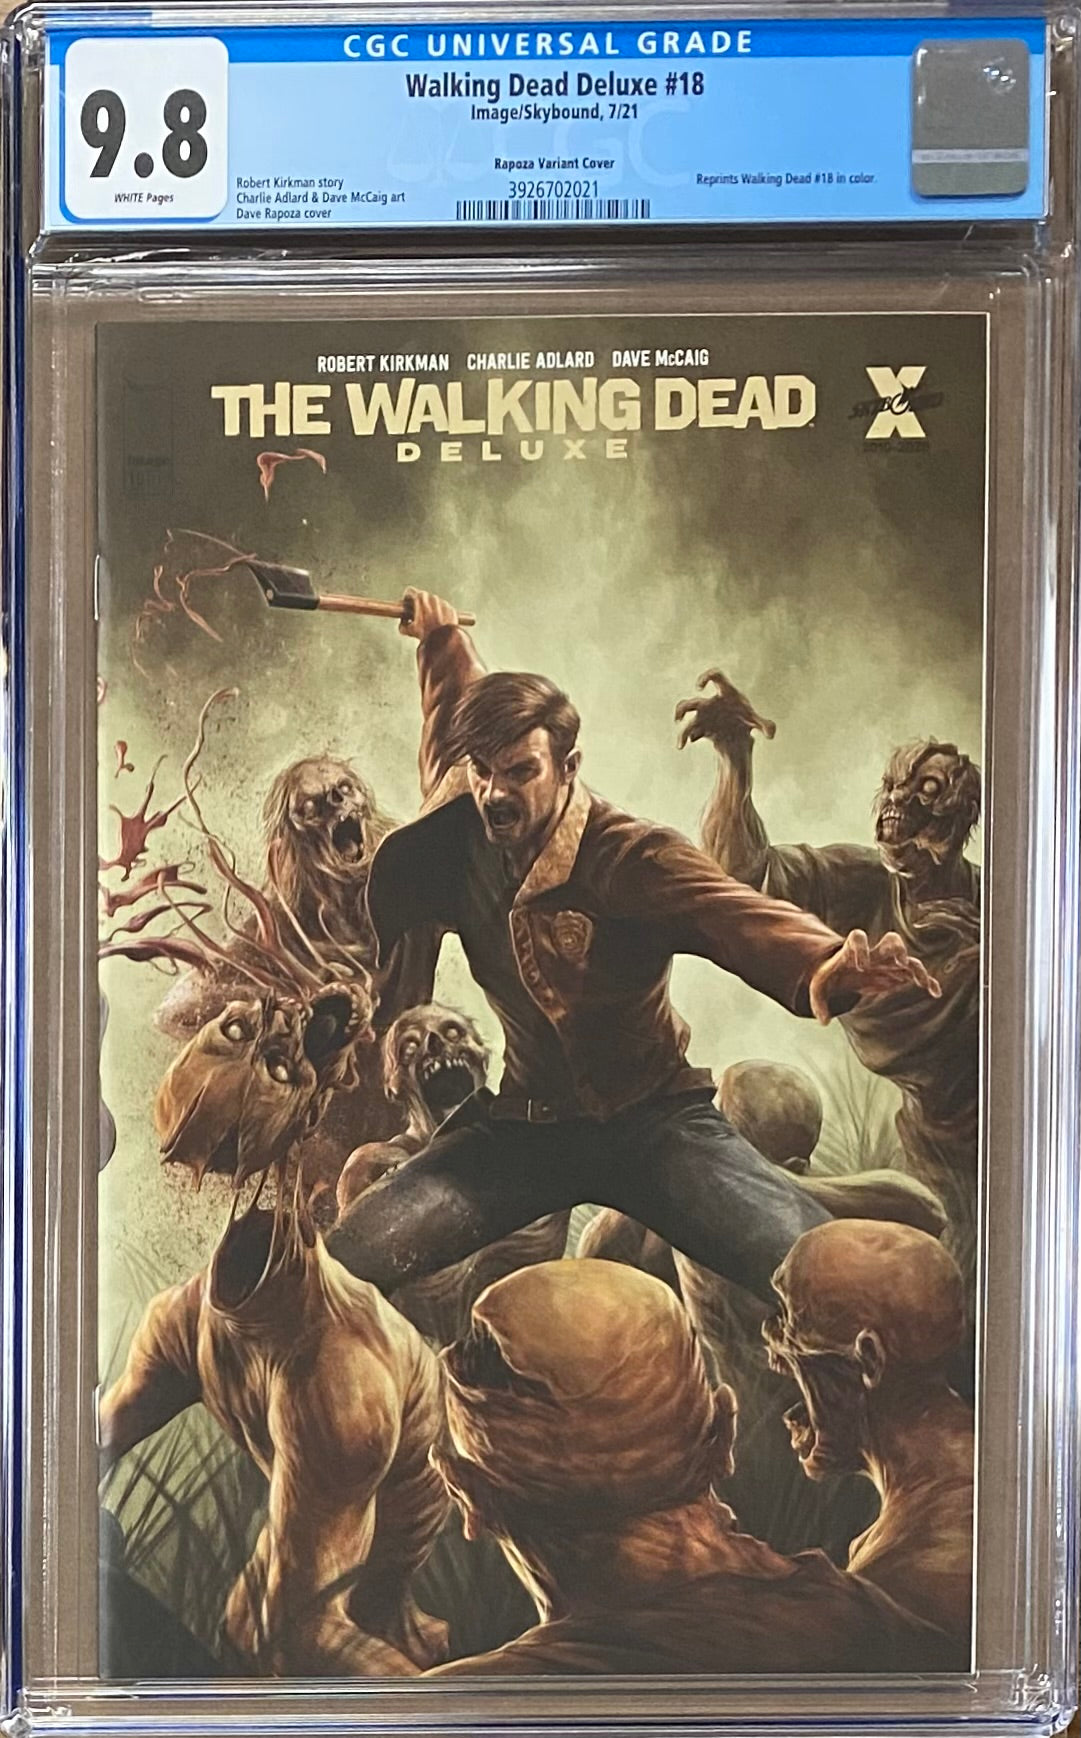 Walking Dead Deluxe #18 Rapoza Variant CGC 9.8